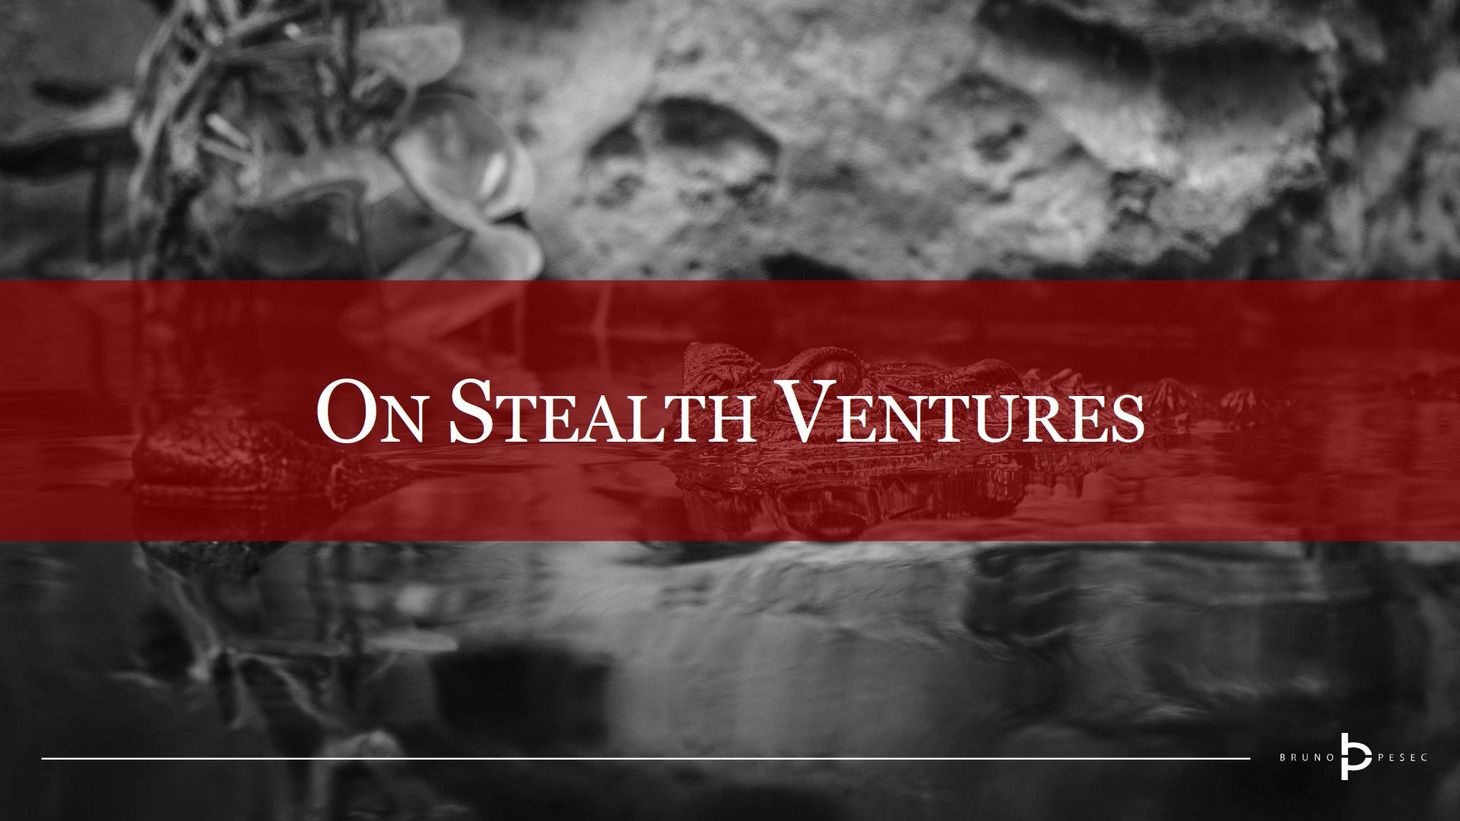 On stealth ventures